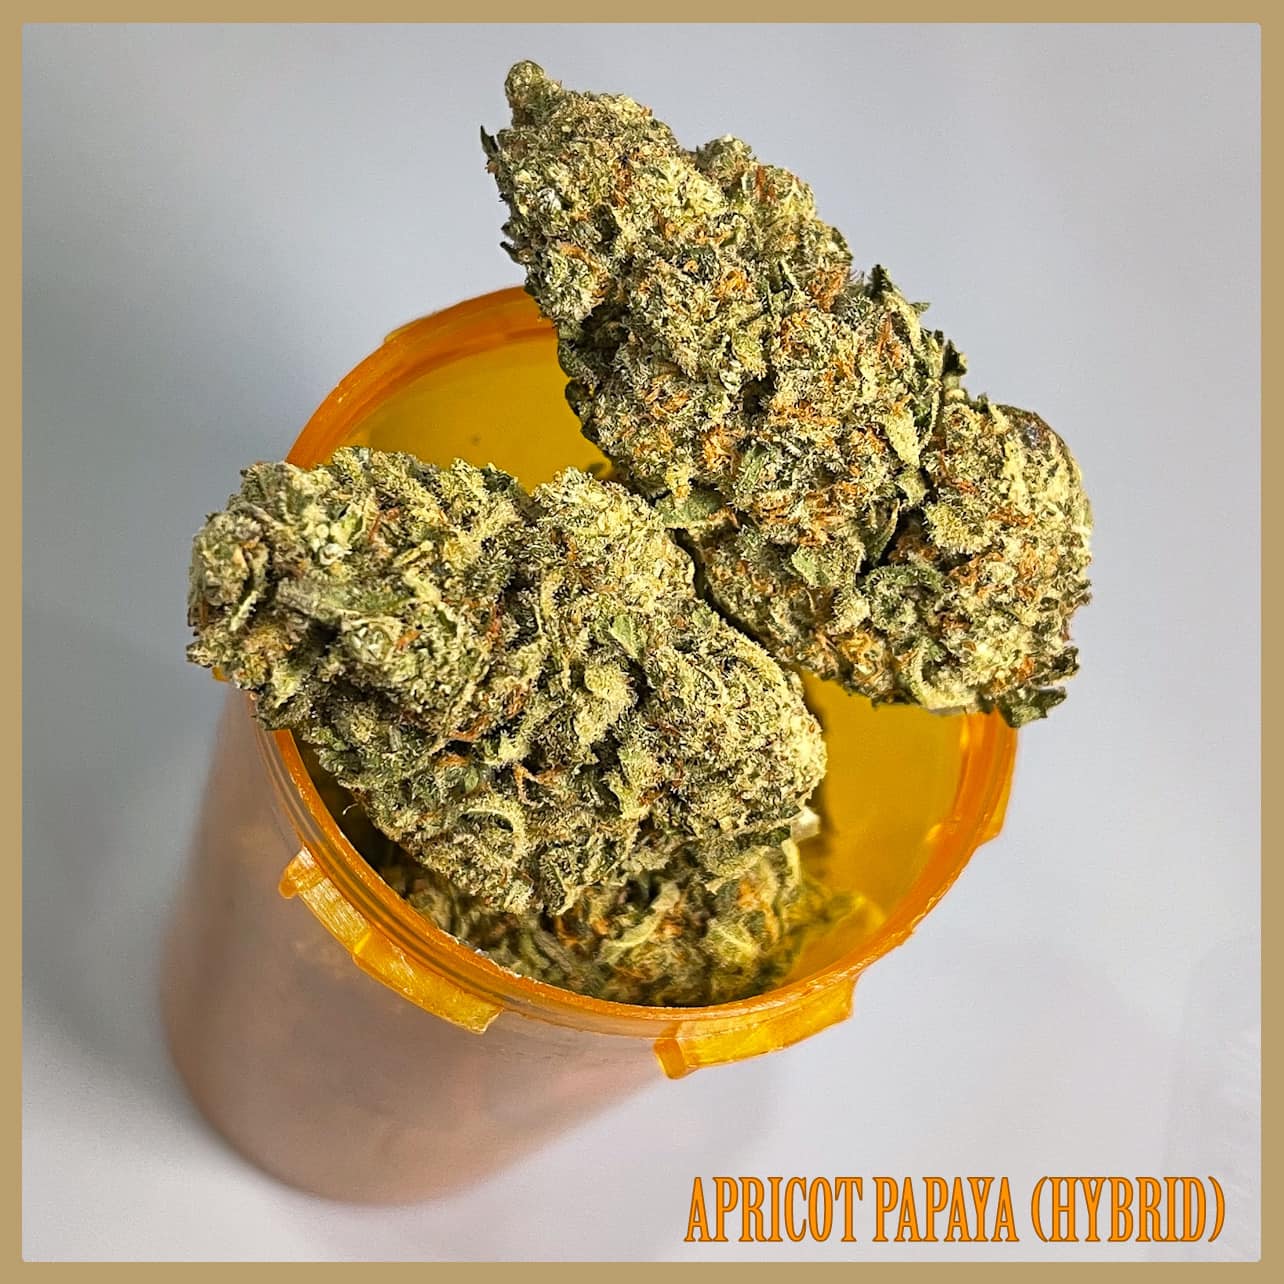 apricot papaya Hybrid strain